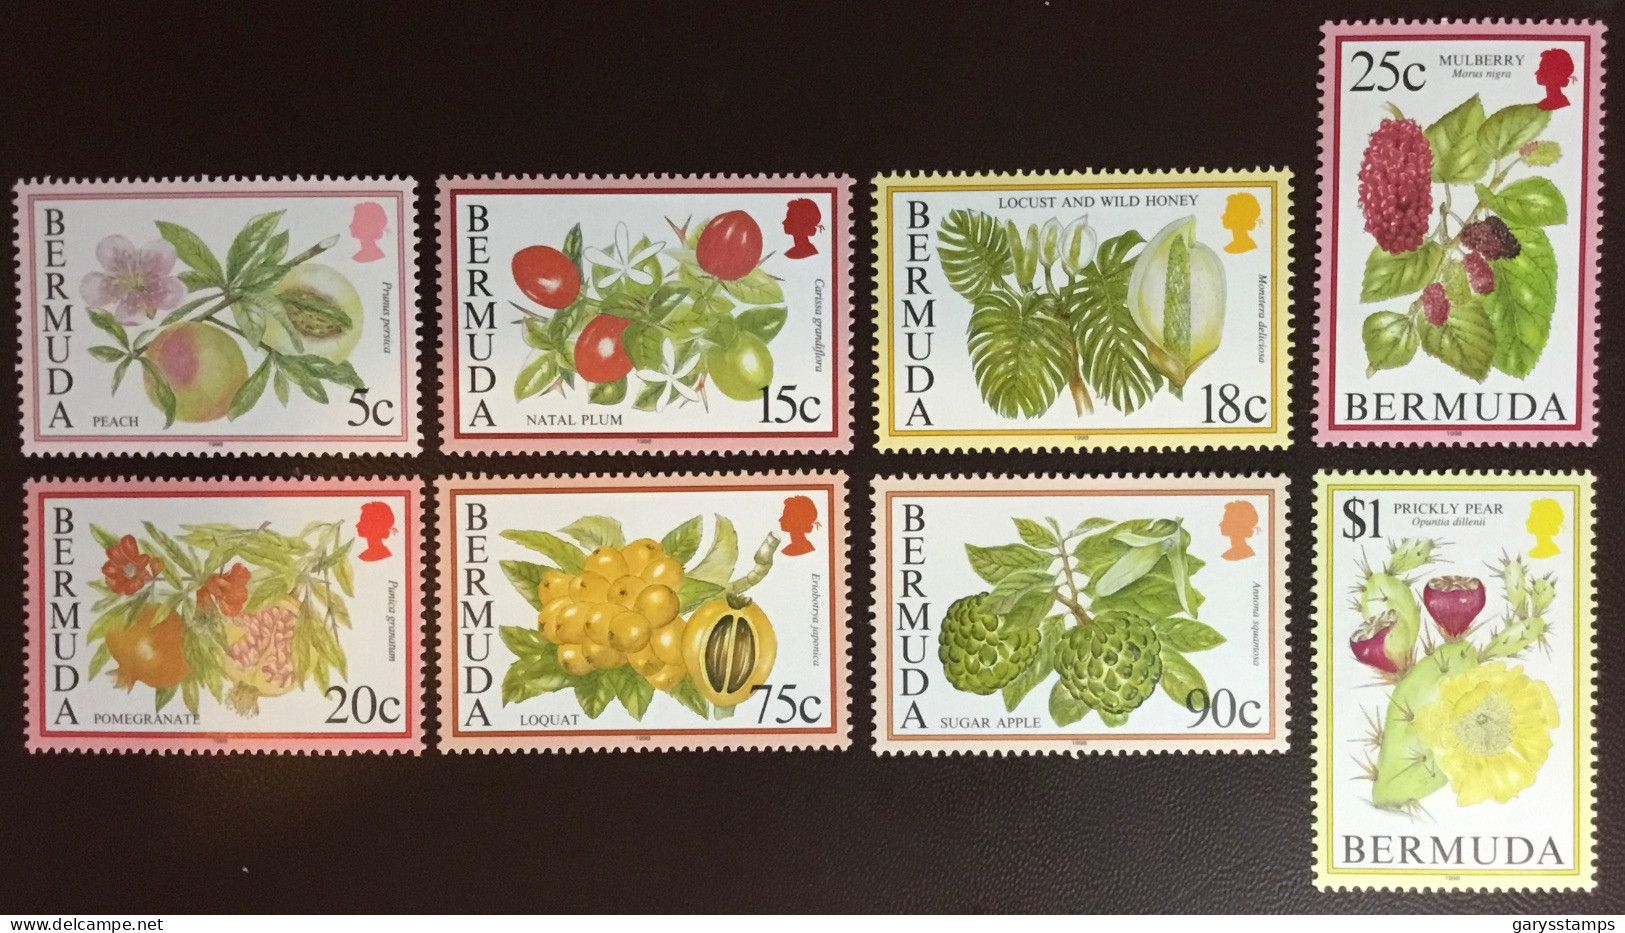 Bermuda 1998 Flowering Fruits Definitives Imprint Date Set MNH - Fruits